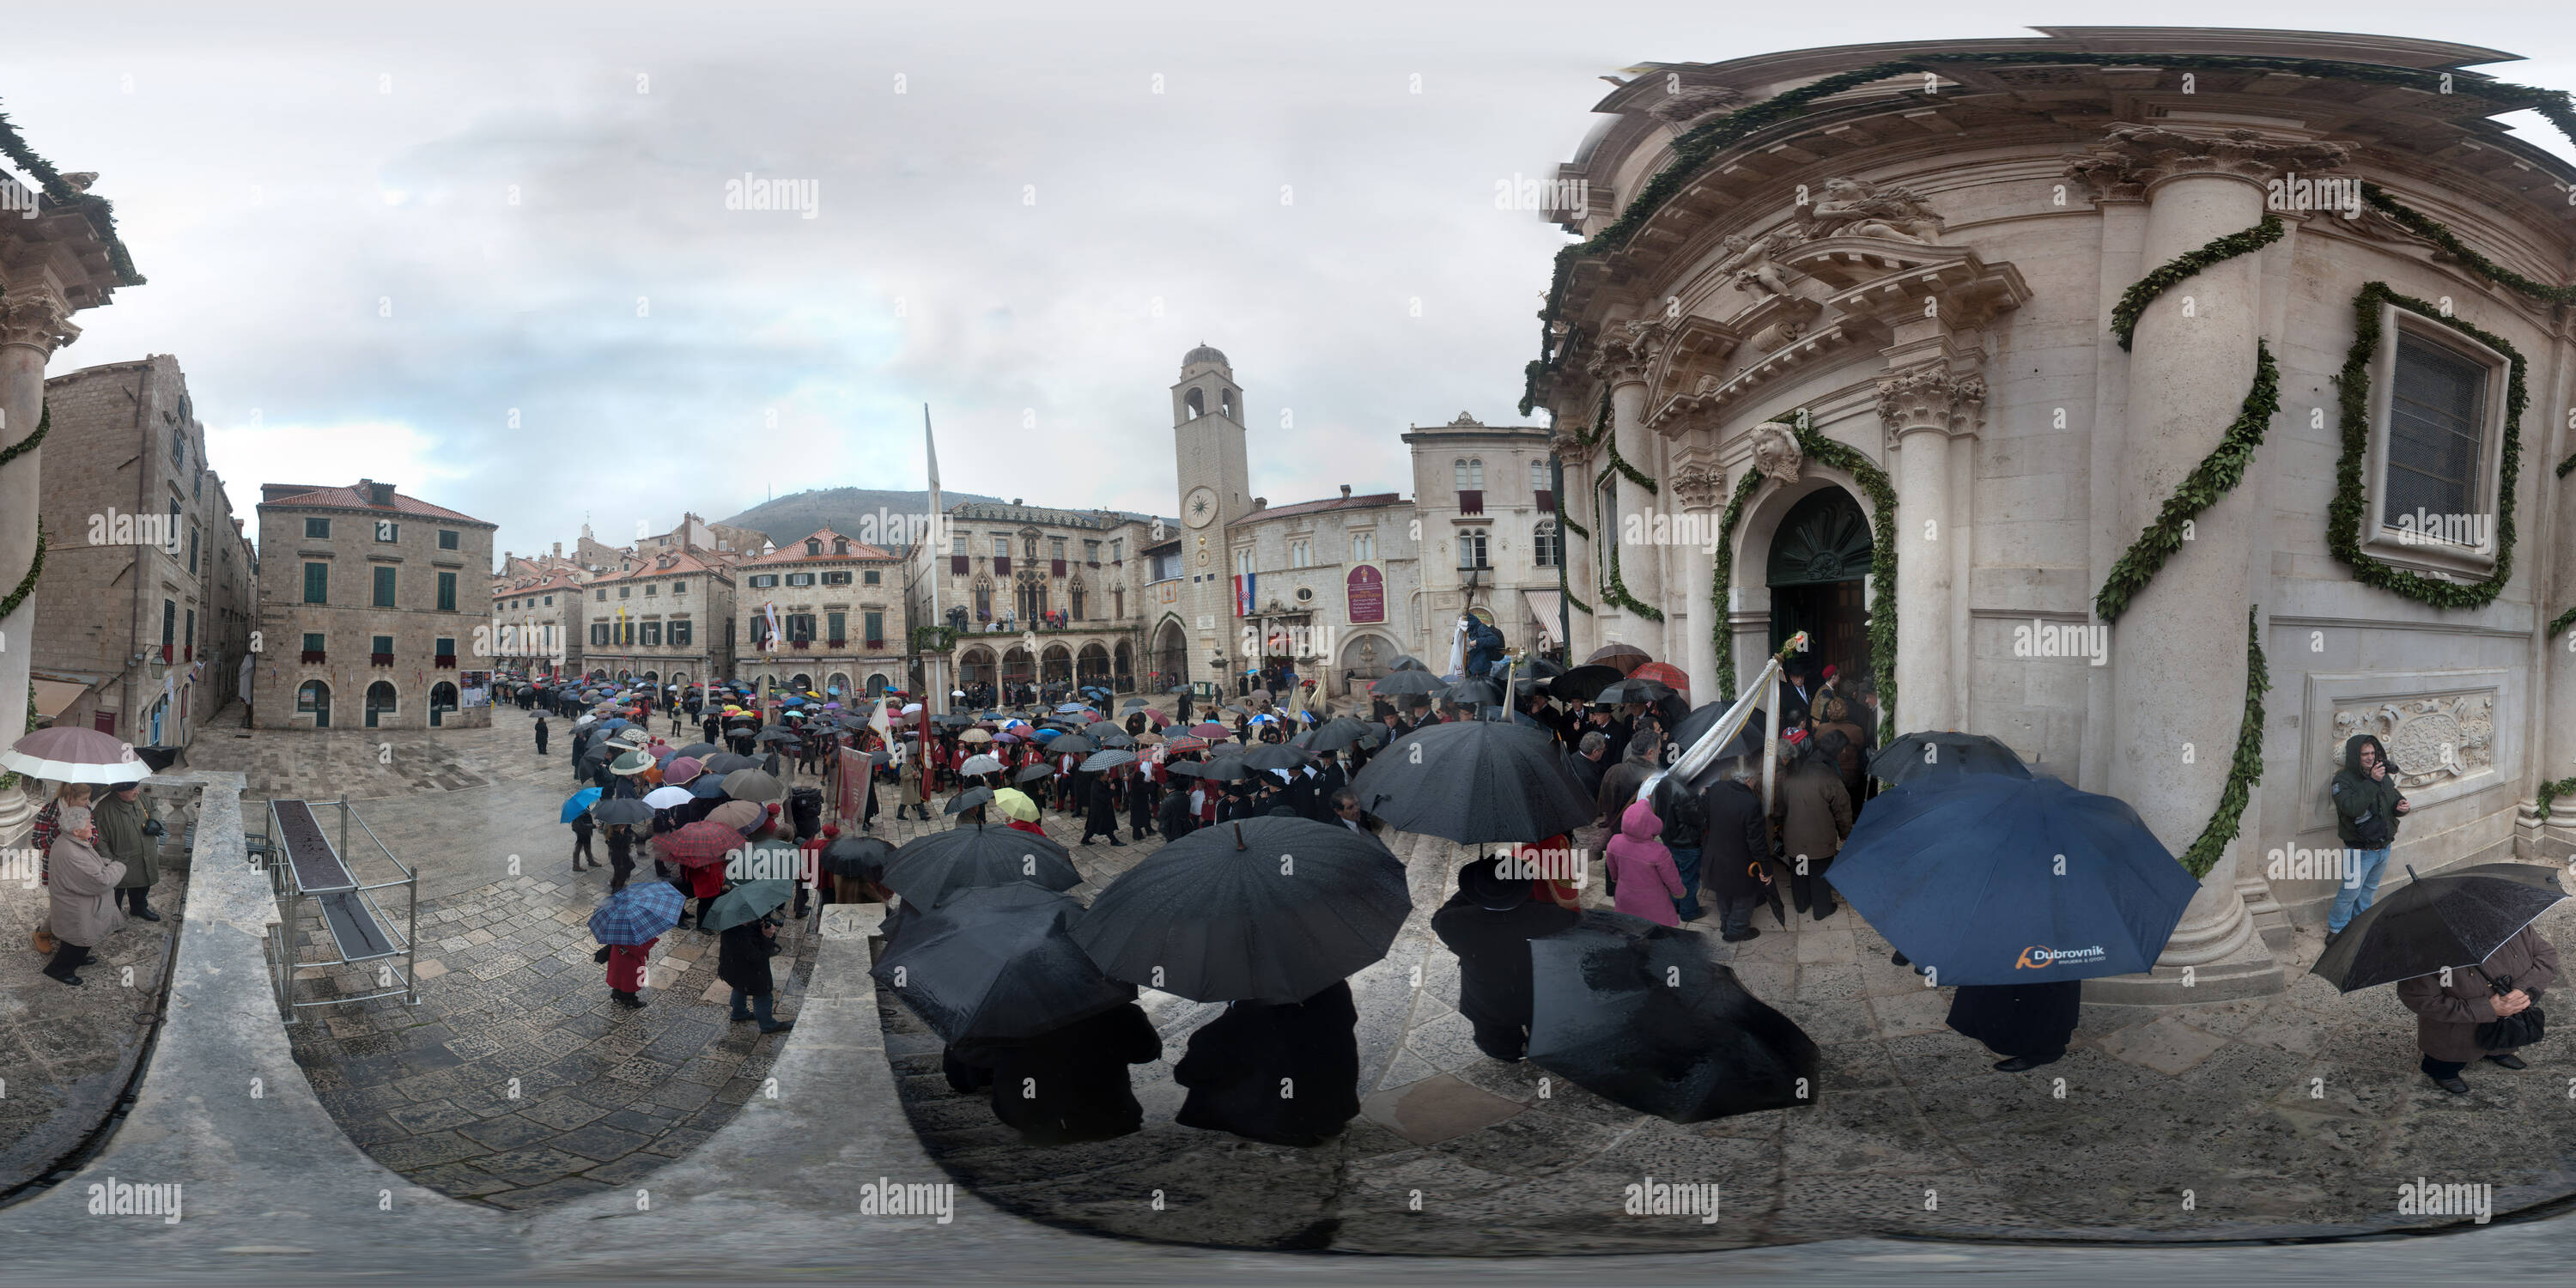 360 degree panoramic view of Saint Blaise in Dubrovnik 2012 edited nadir